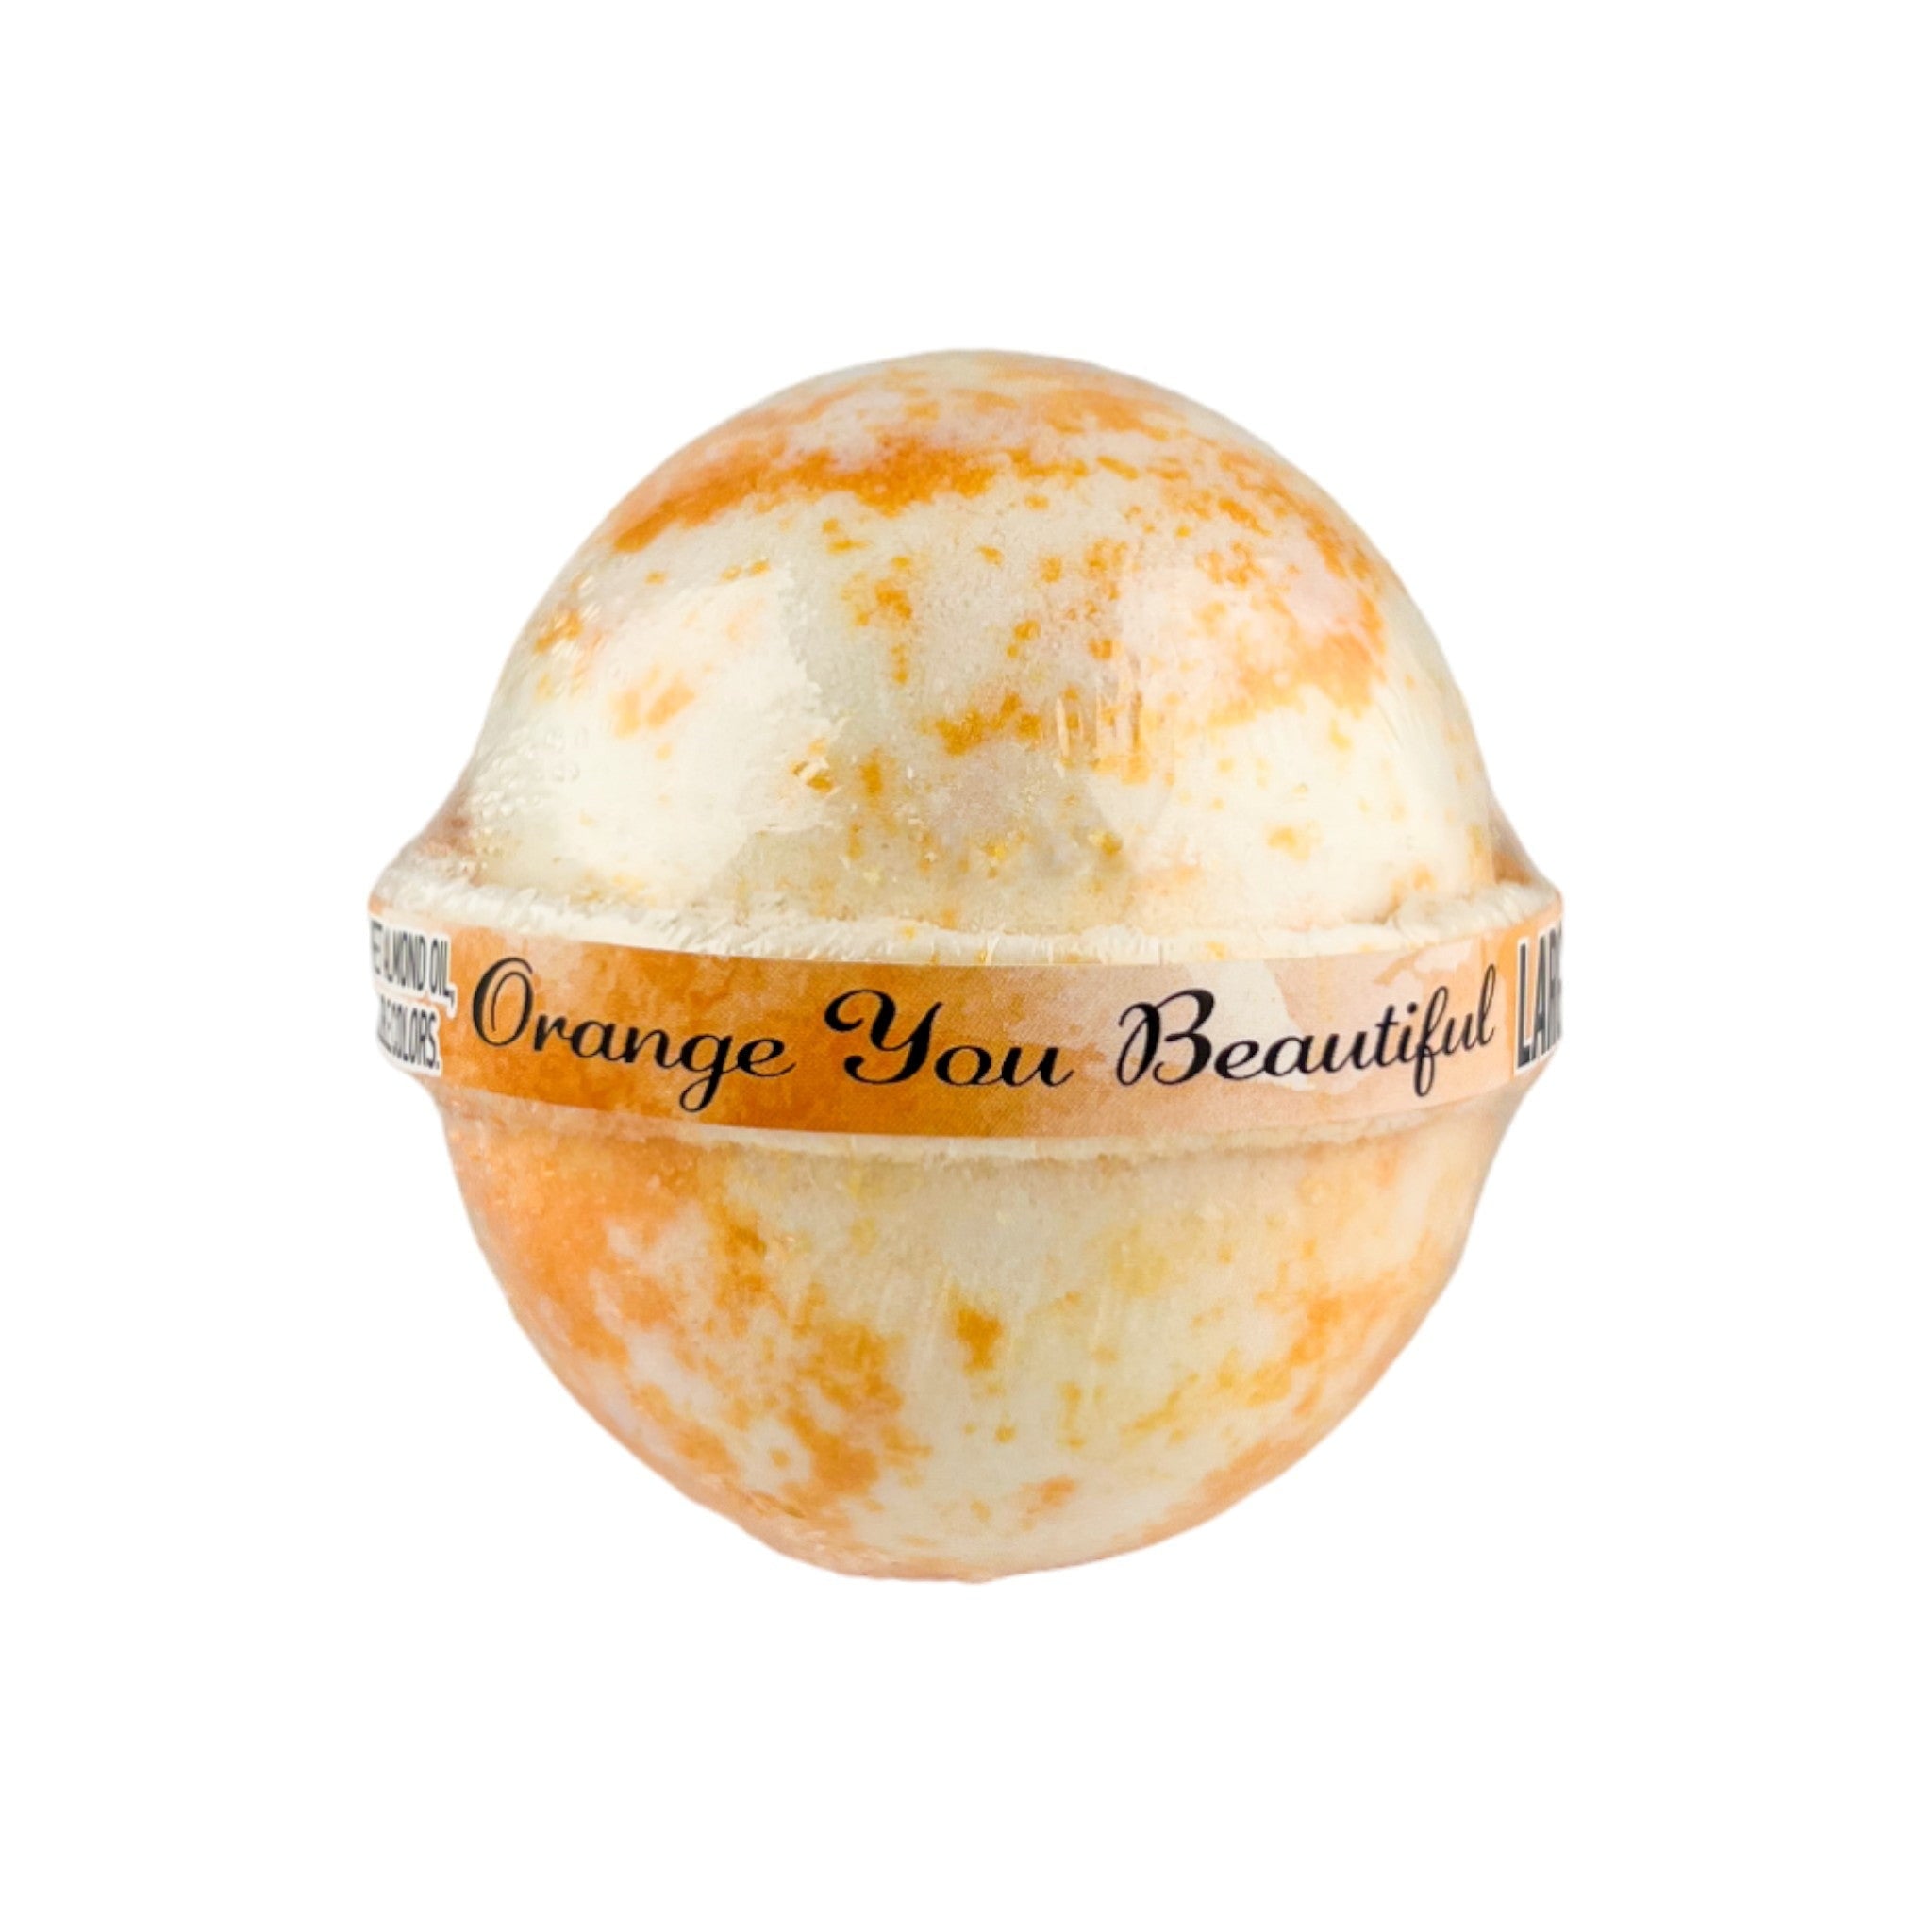 Orange You Beautiful Bath Bomb -Large - Old Town Soap Co.